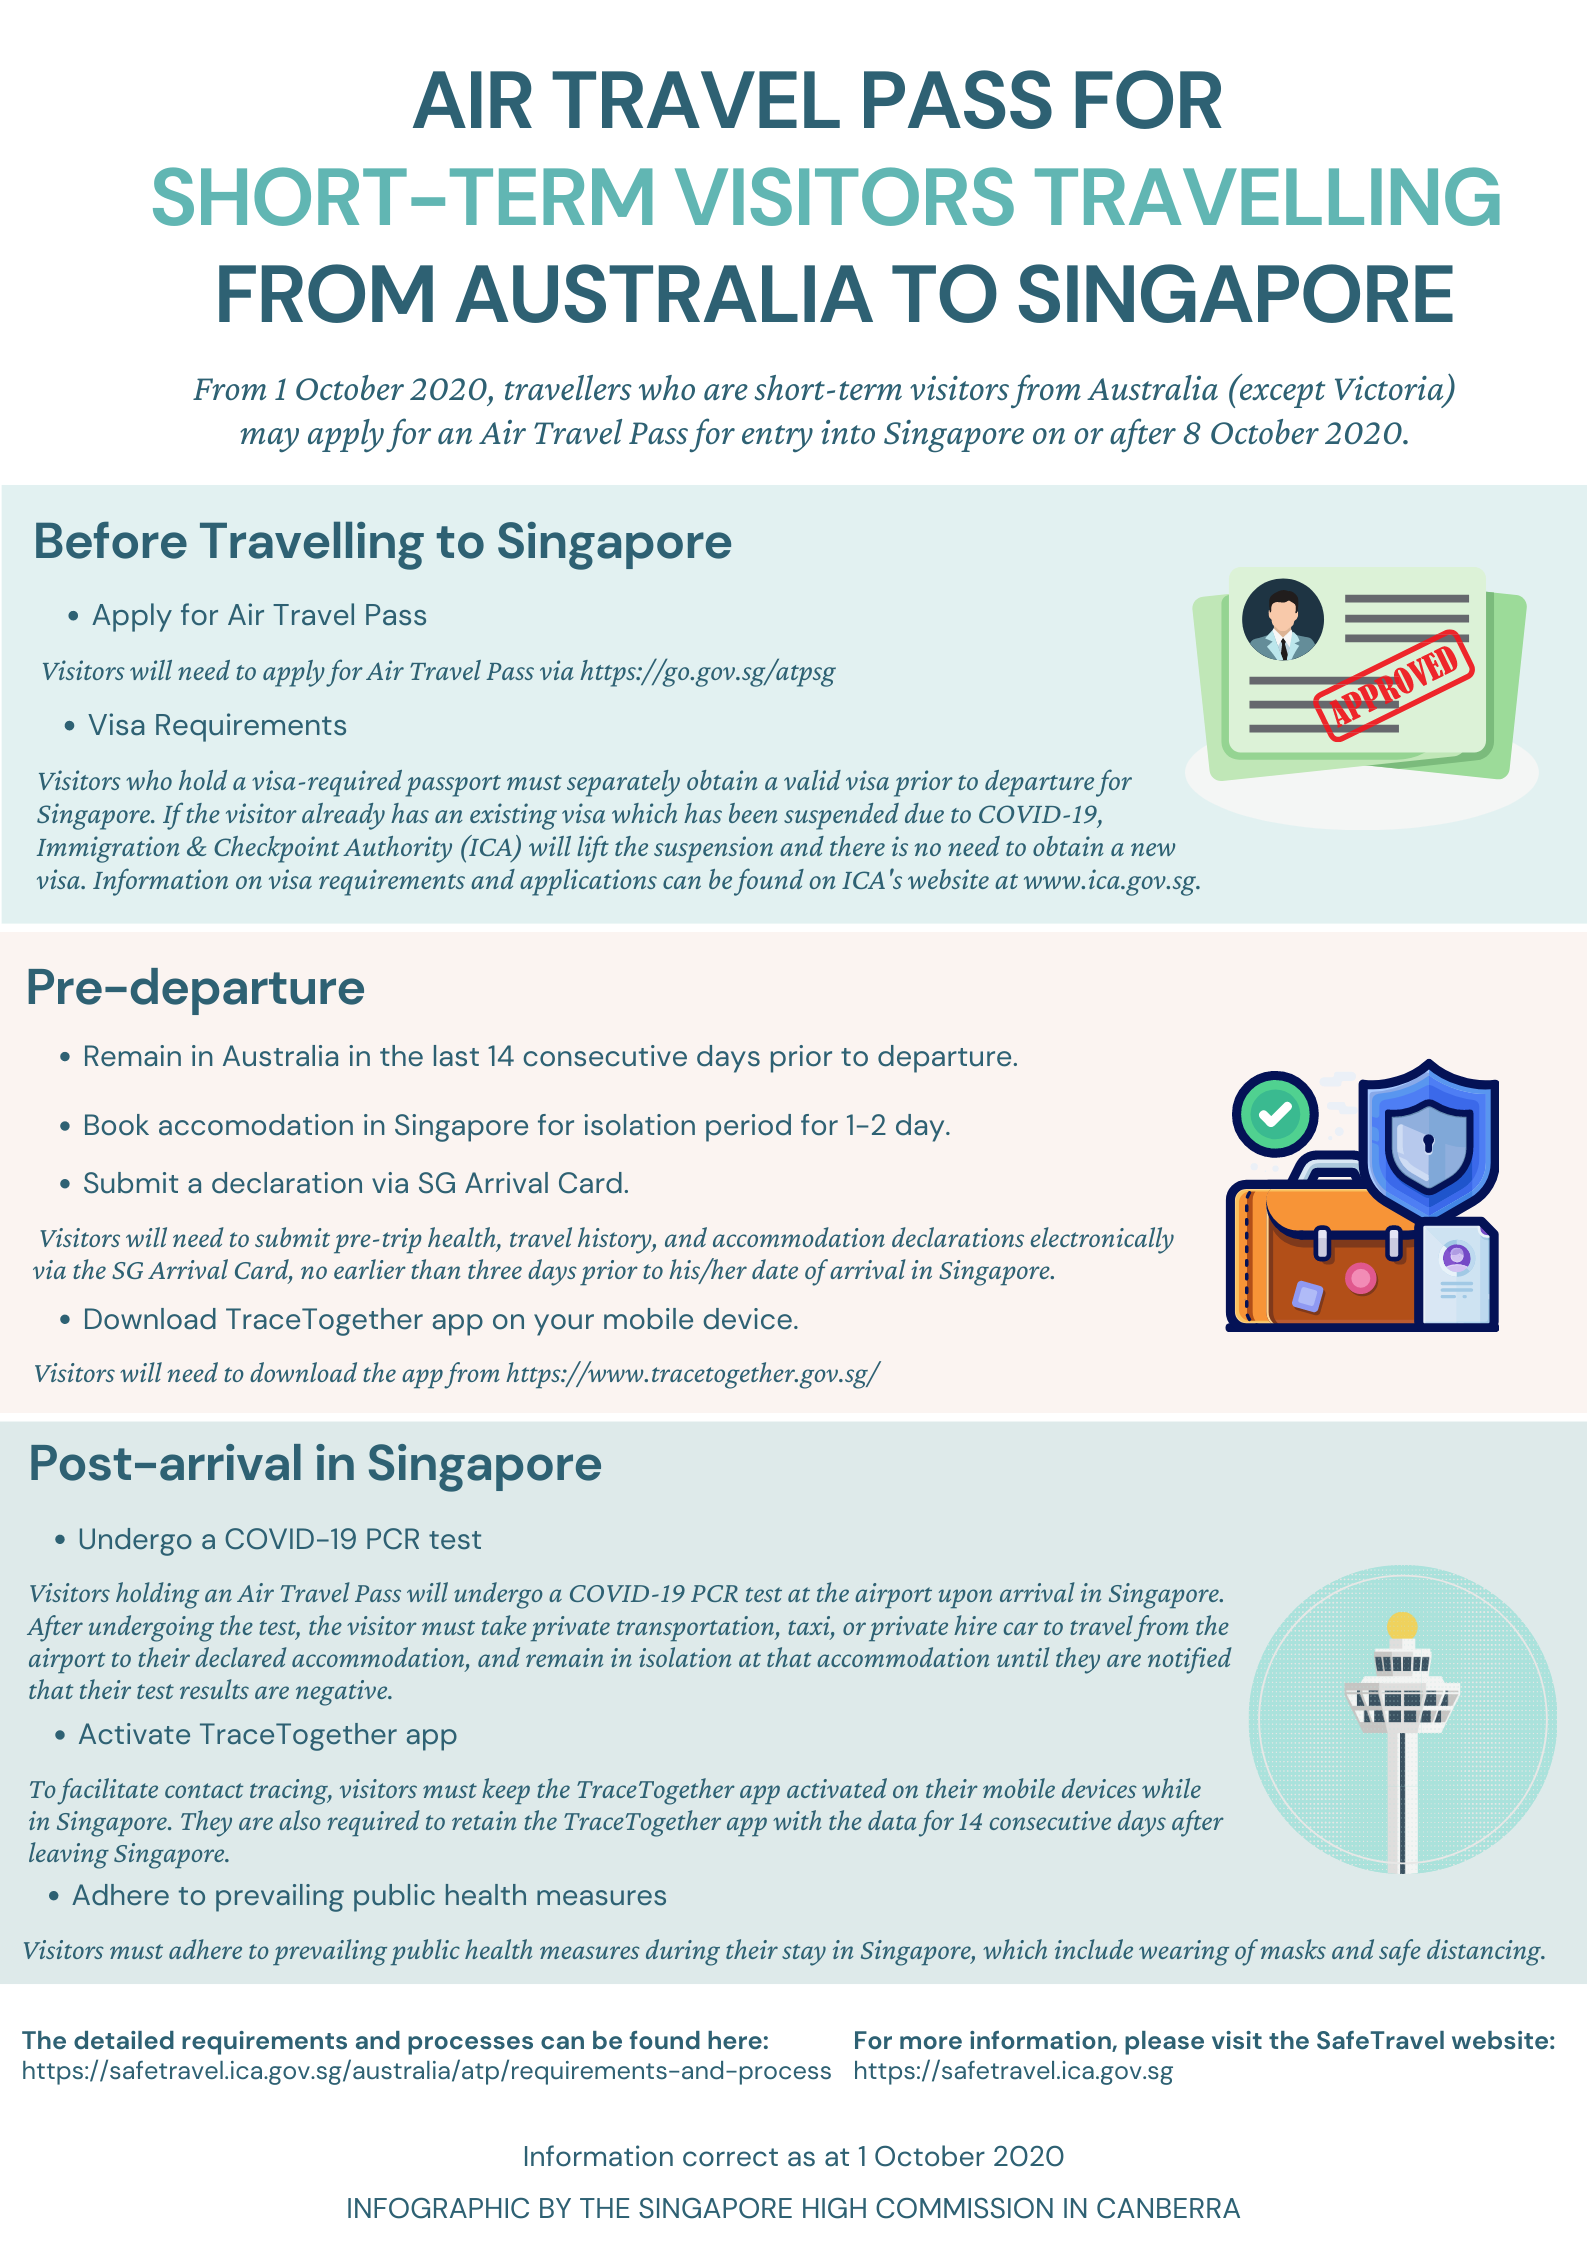 mfa travel advisory singapore